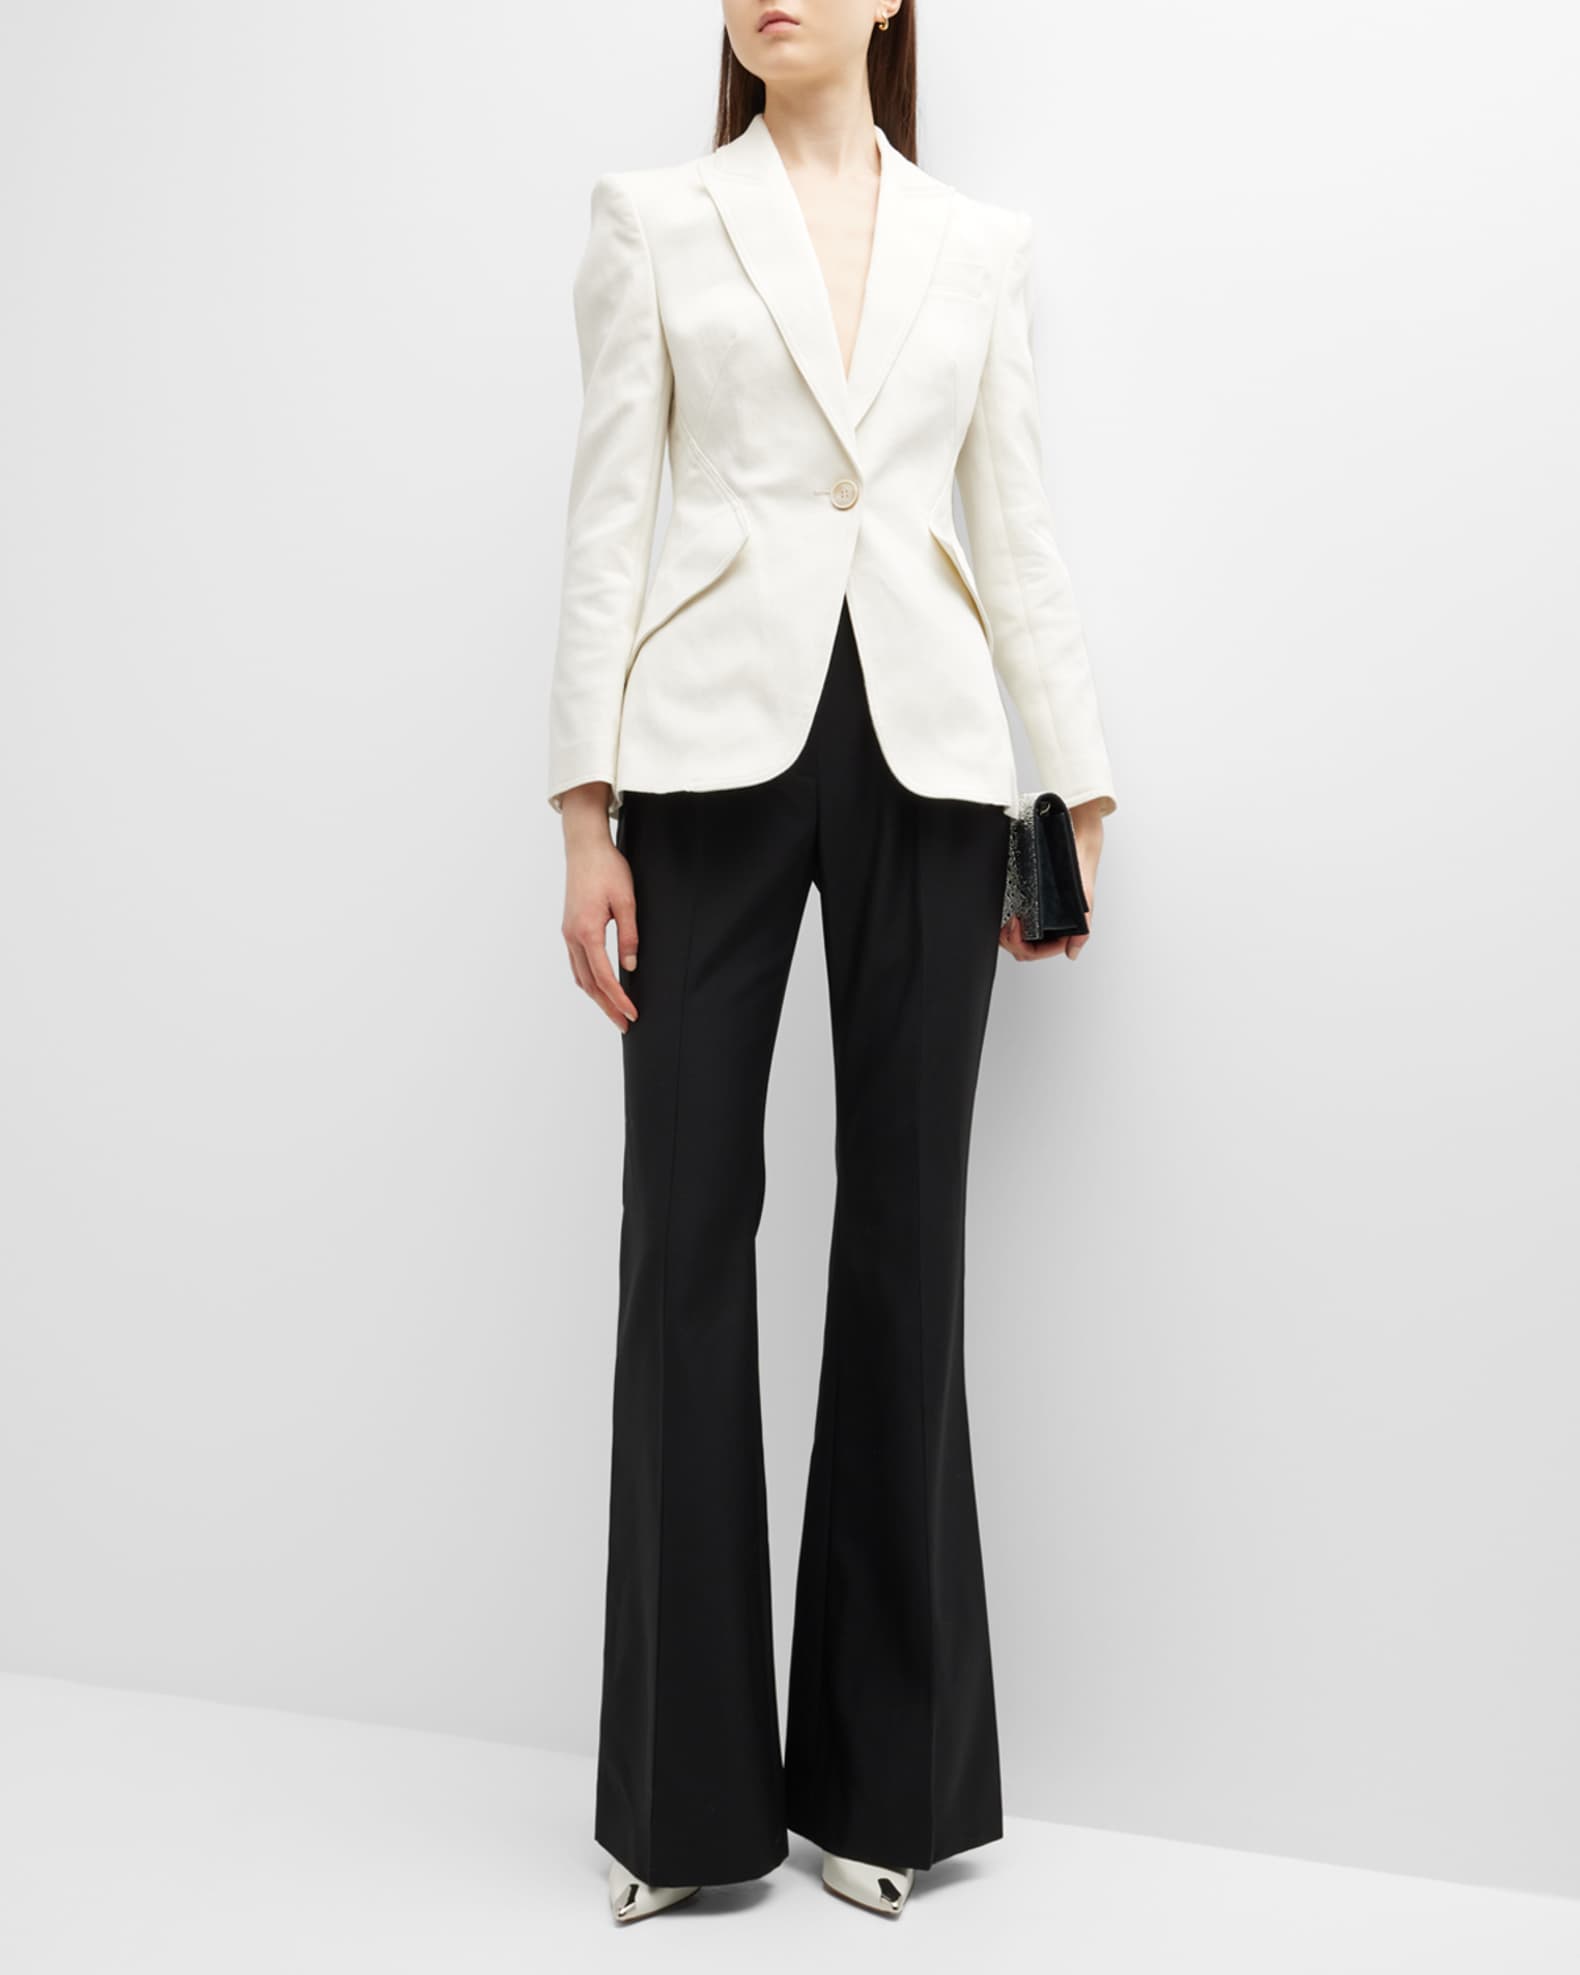 Crystal Embellished Suit | Neiman Marcus